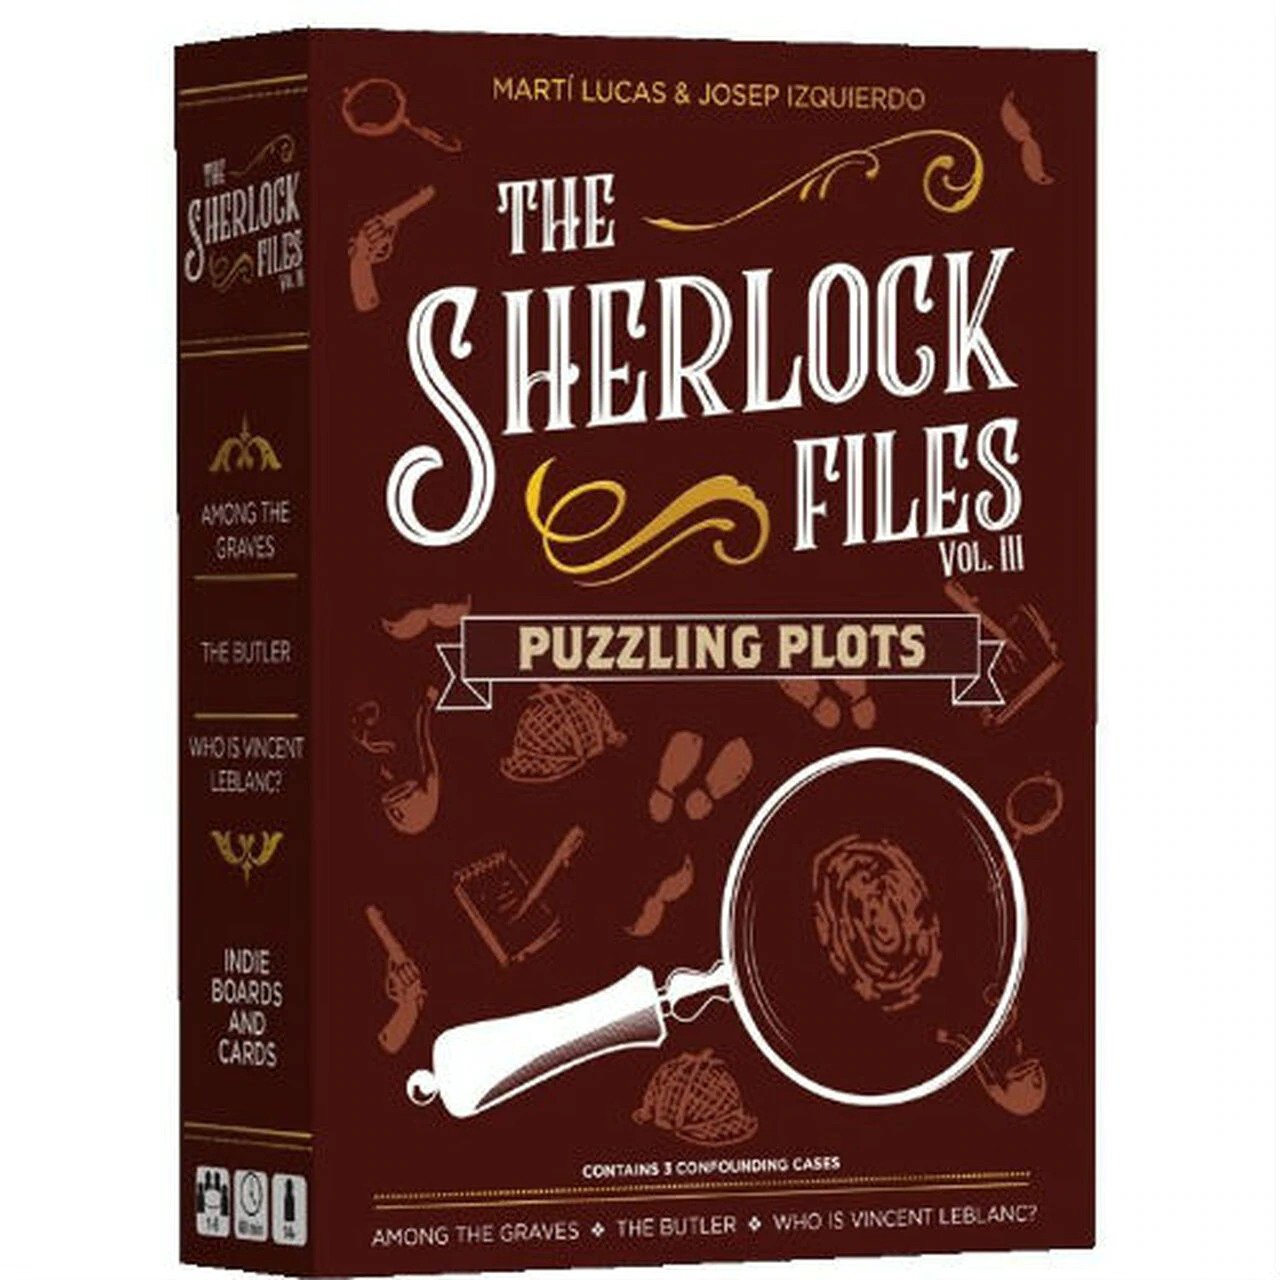 The Sherlock Files: Puzzling Plots